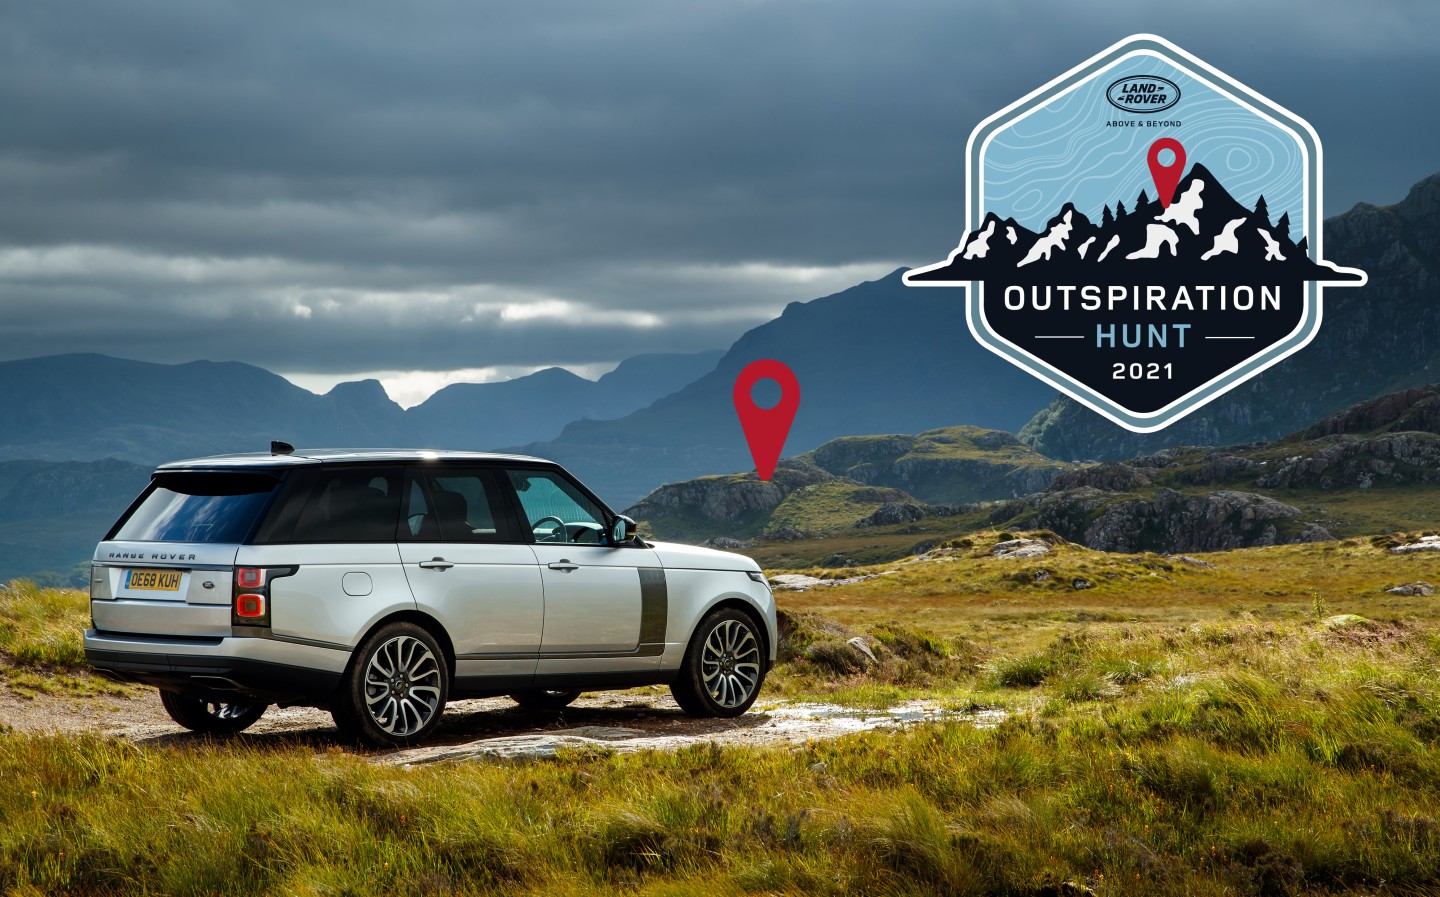 Land Rover Outspiration digital treasure hunt UK